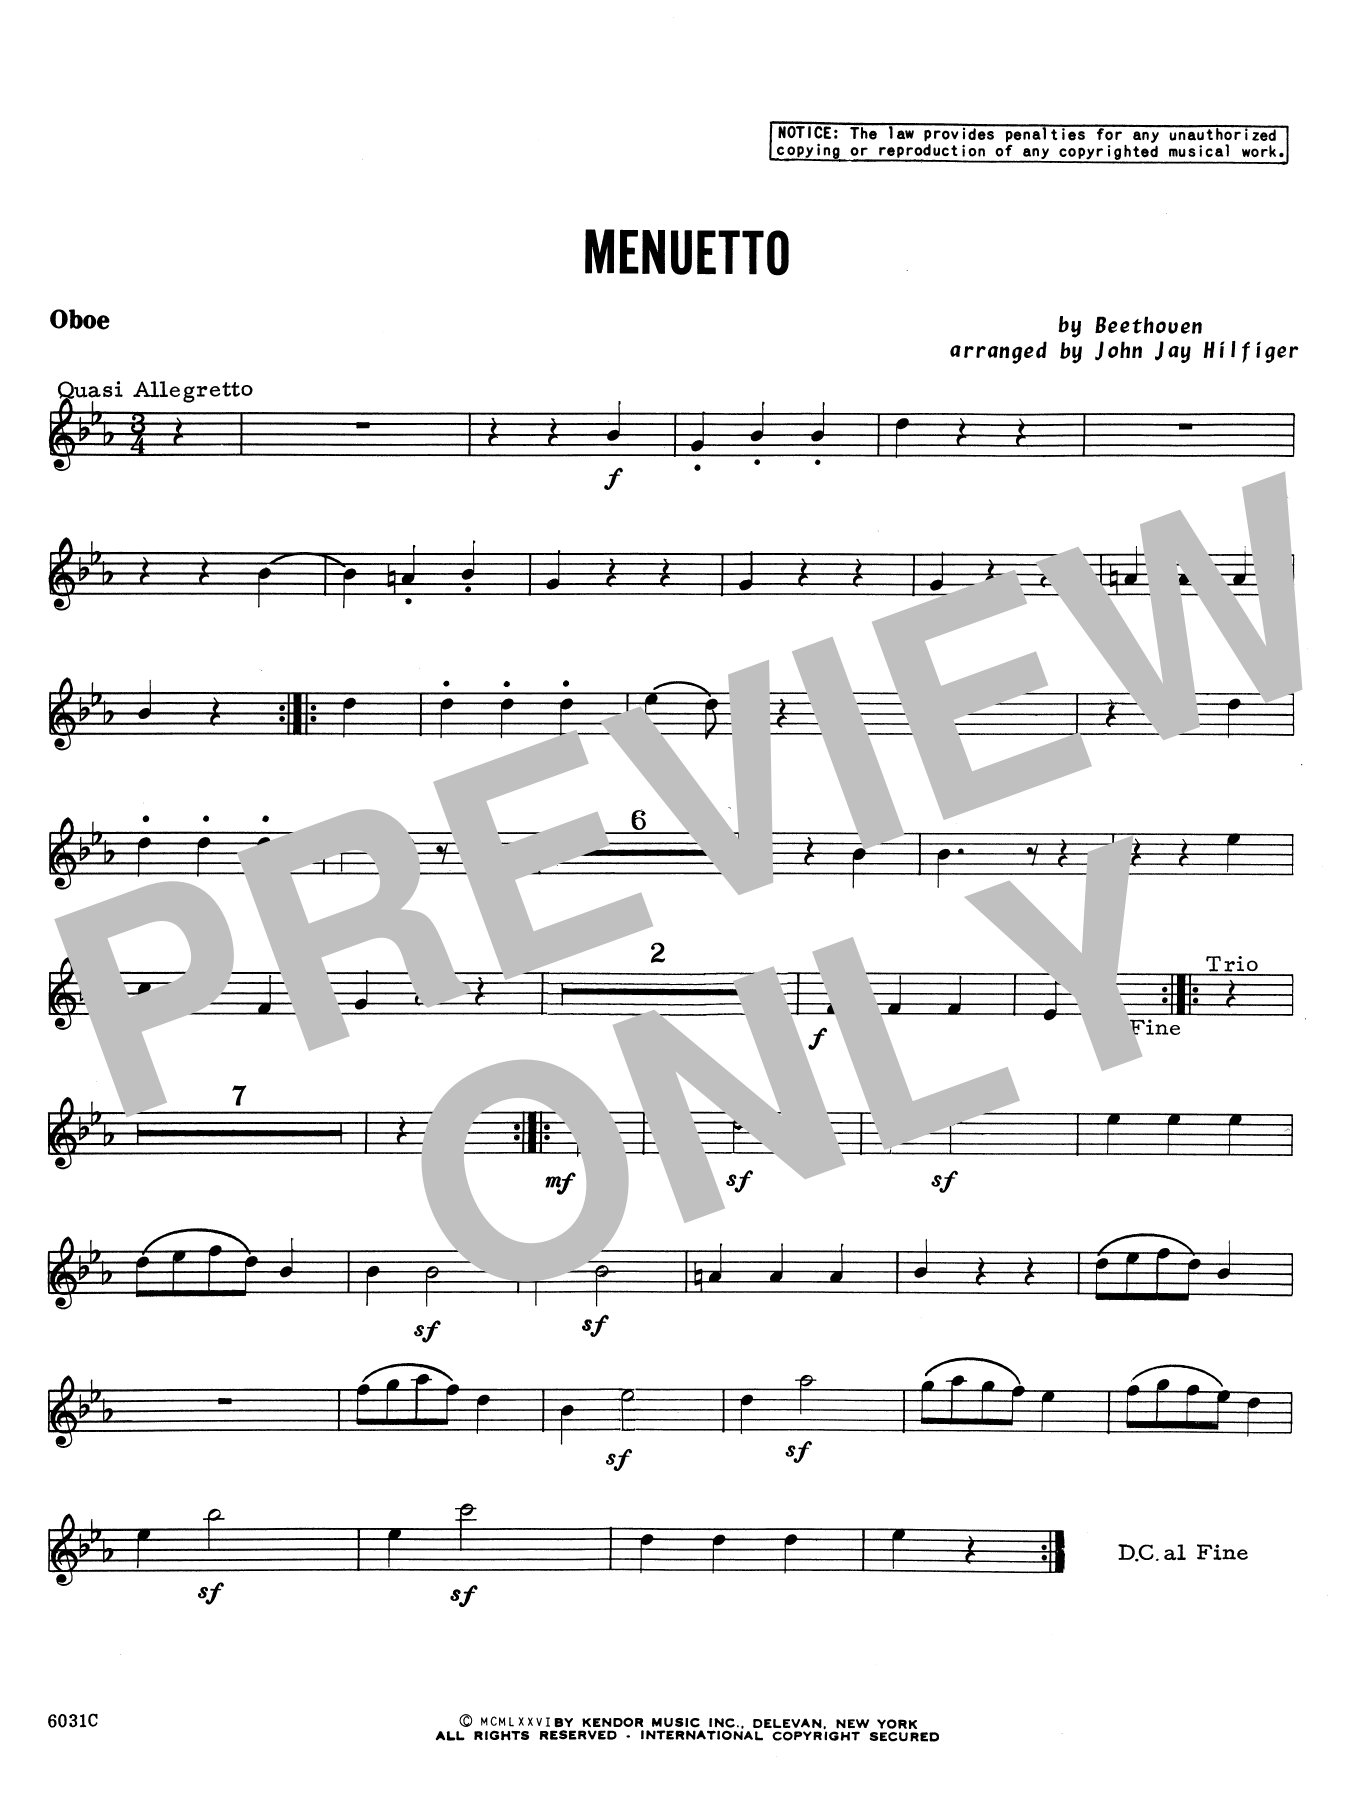 Download John Jay Hilfiger Menuetto - Oboe Sheet Music